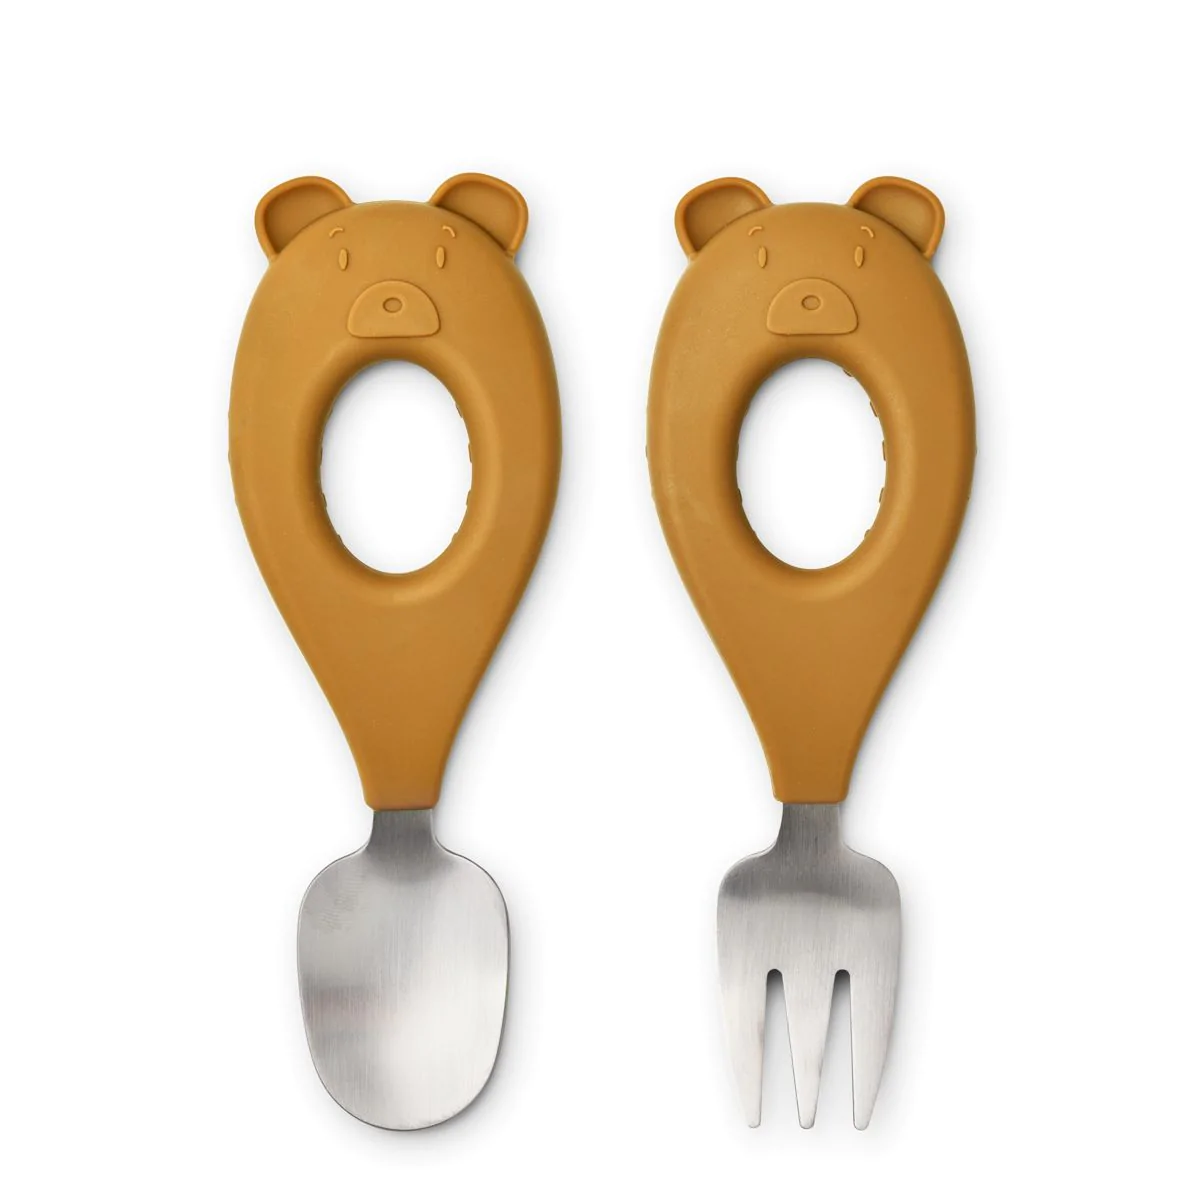 Stanley baby cutlery set - Mr bear / Golden caramel